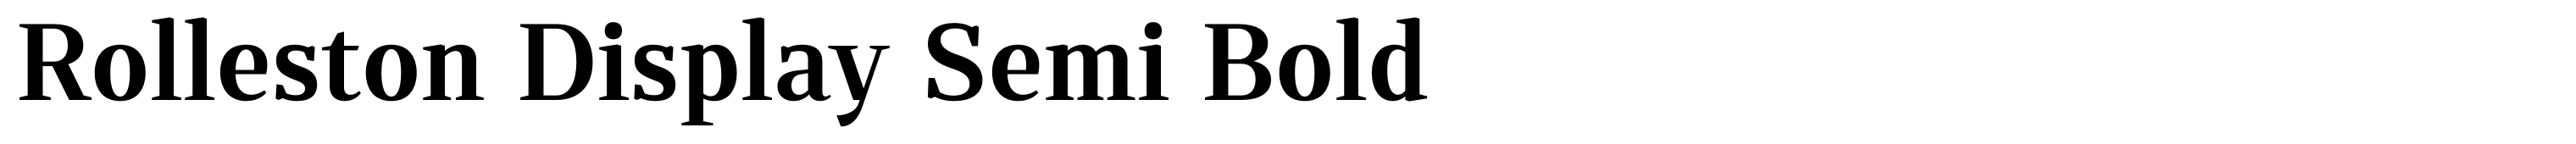 Rolleston Display Semi Bold